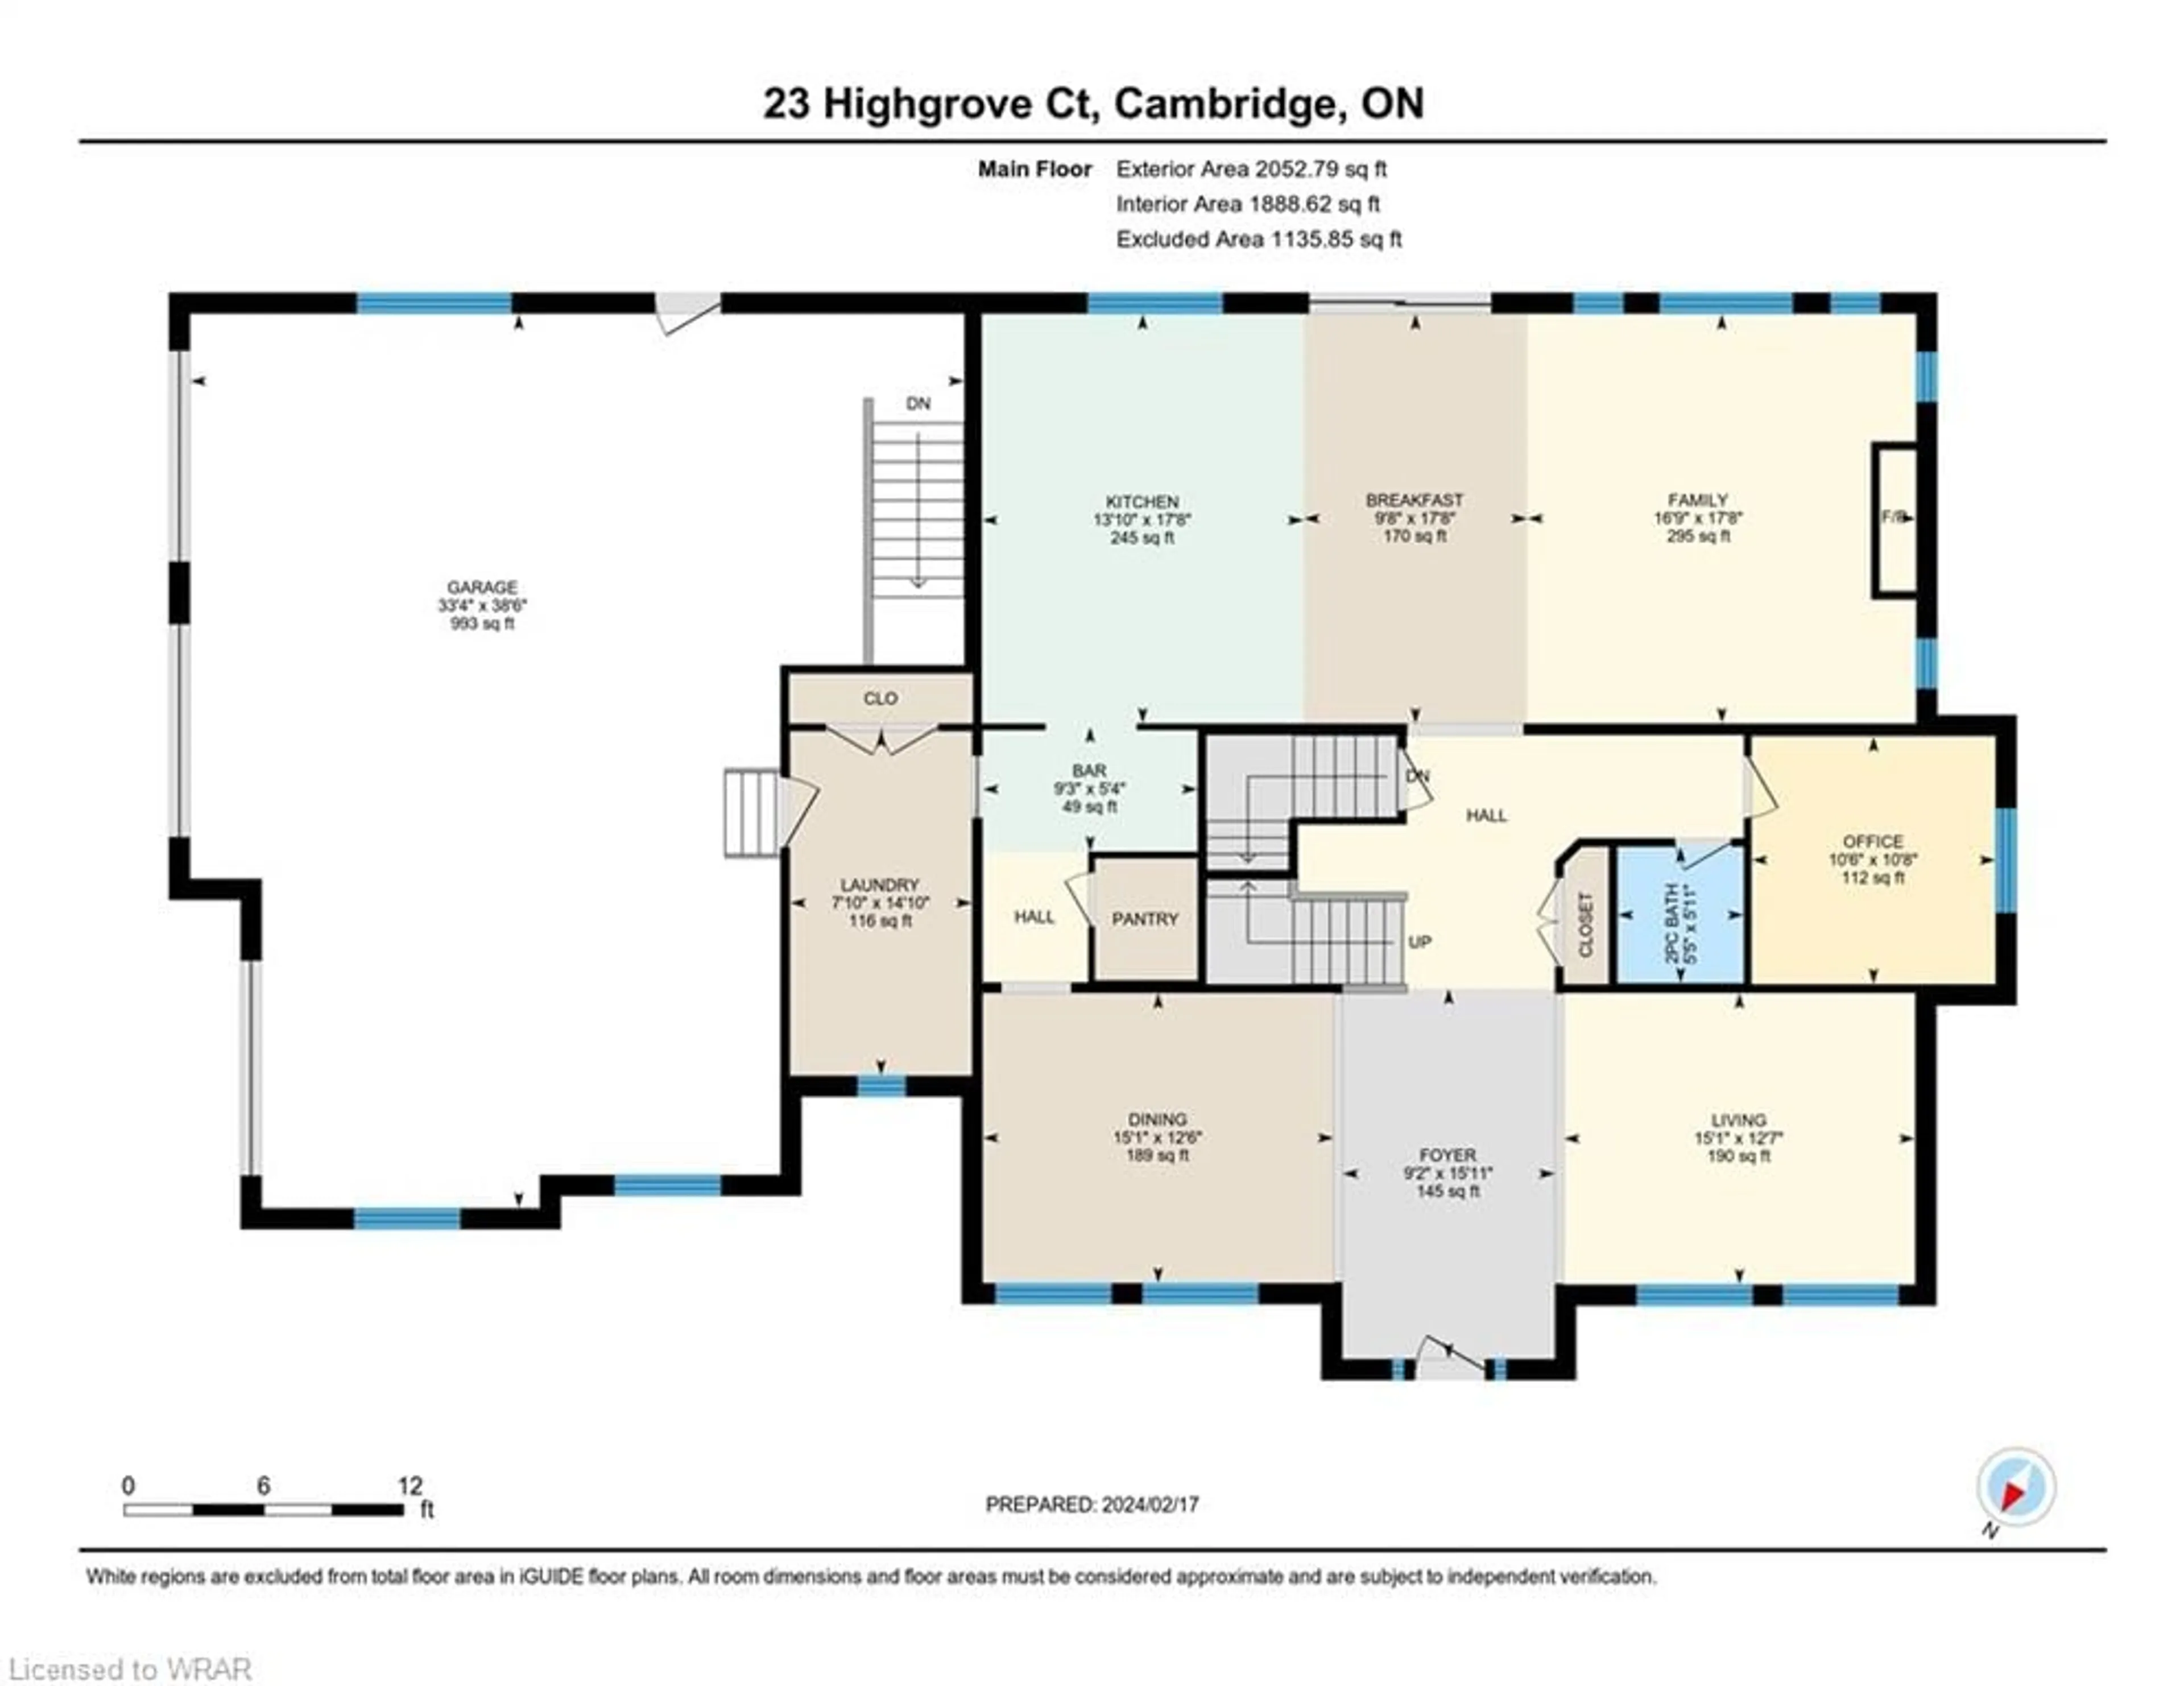 Floor plan for 23 Highgrove Crt, Cambridge Ontario N3H 4R8